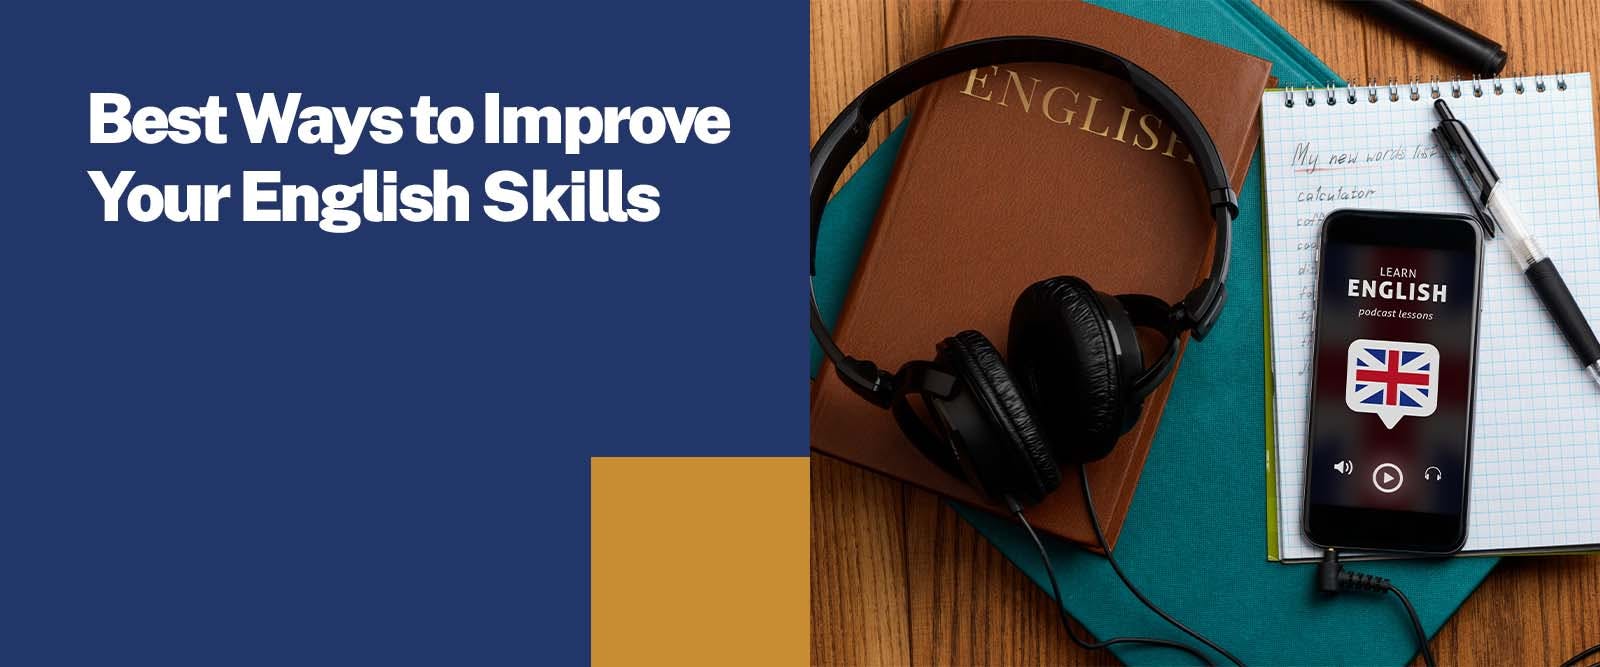 Best Ways to Improve Your English Skills